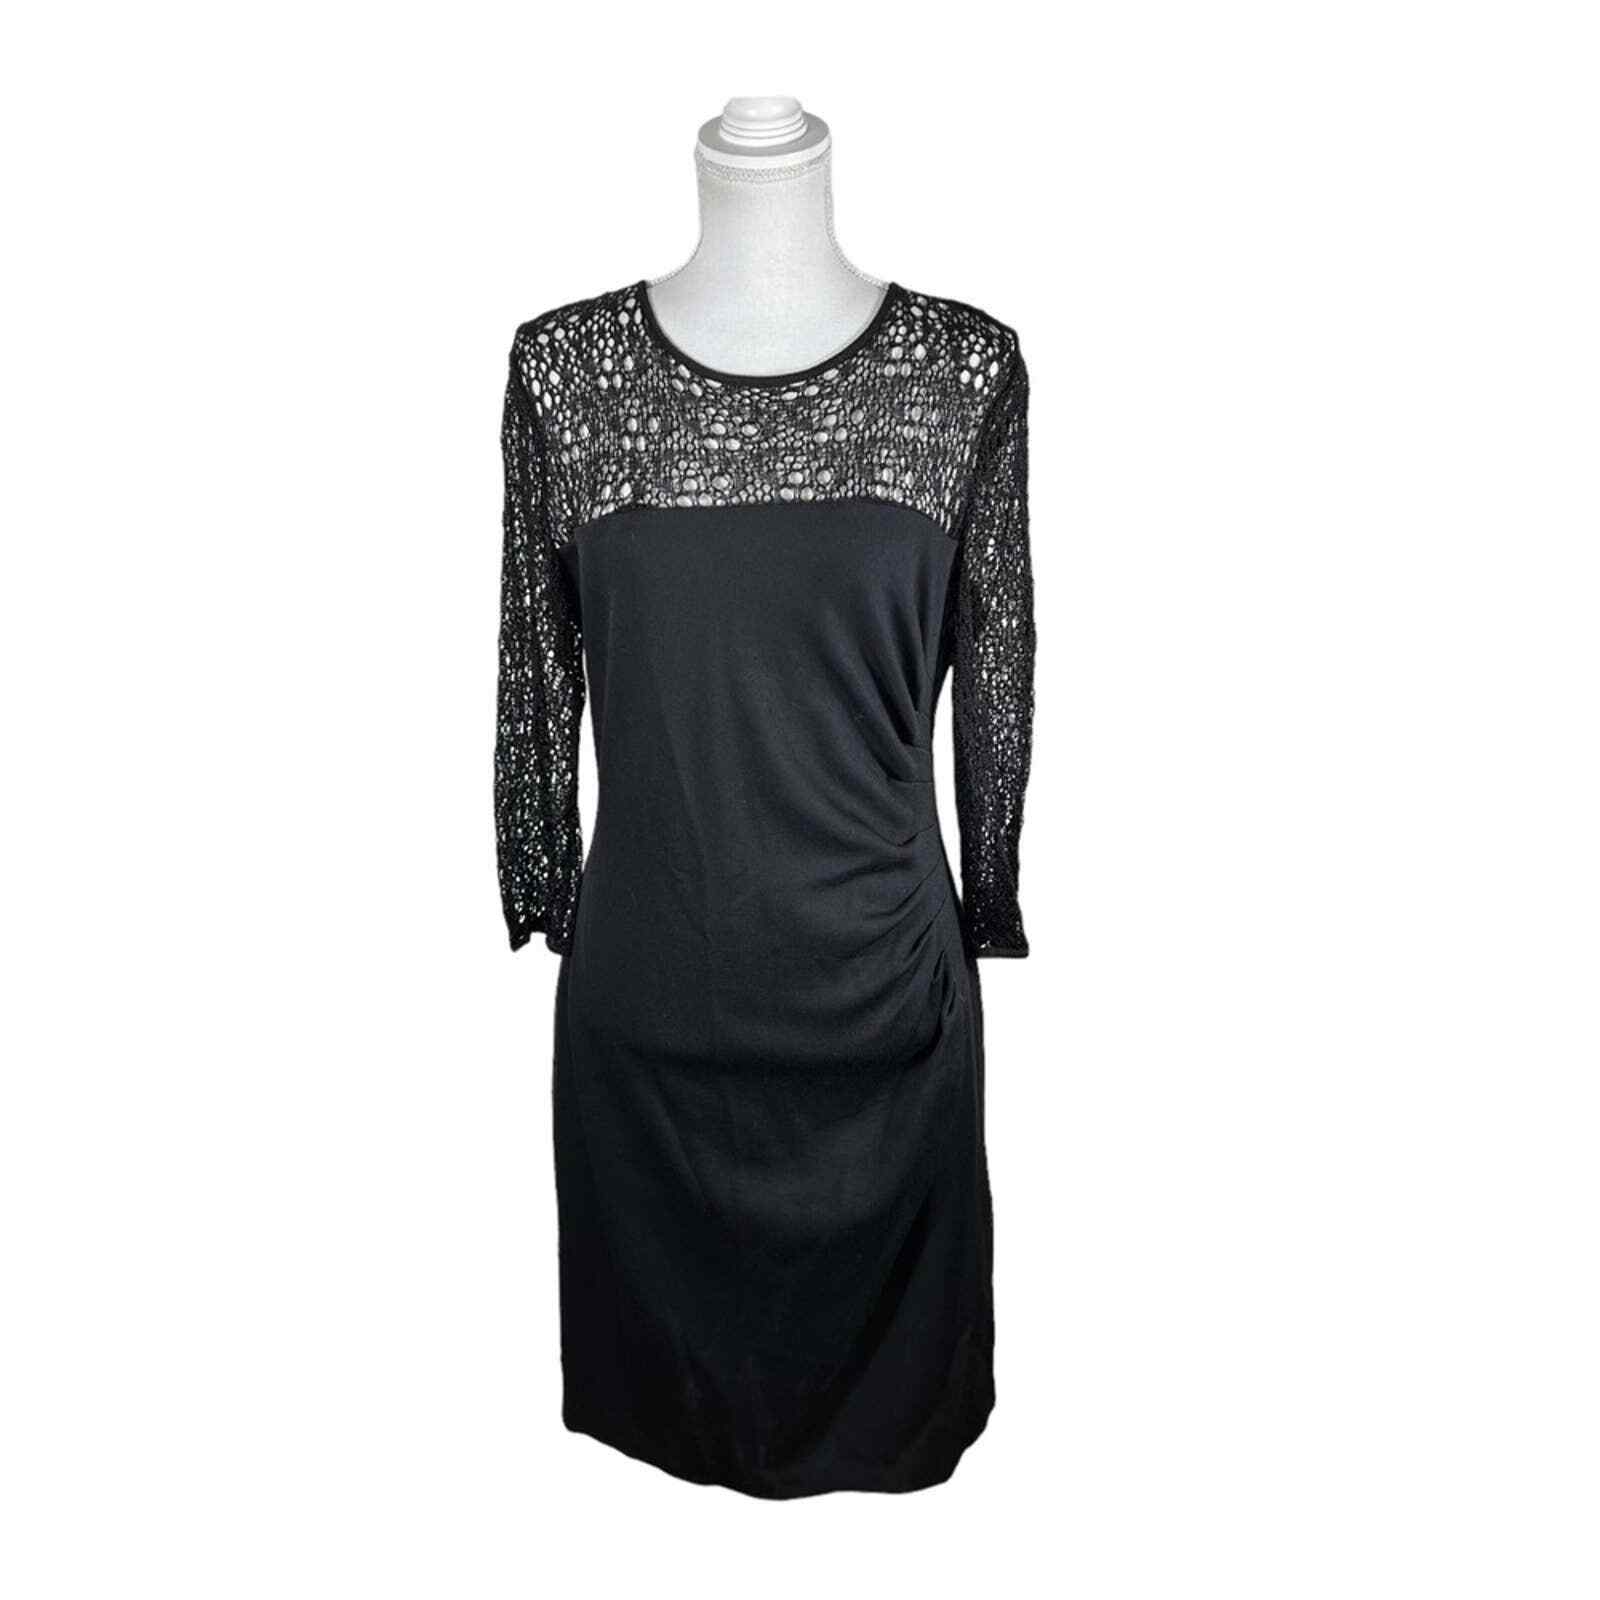 St John Black Side Ruched Lace Dress - image 1